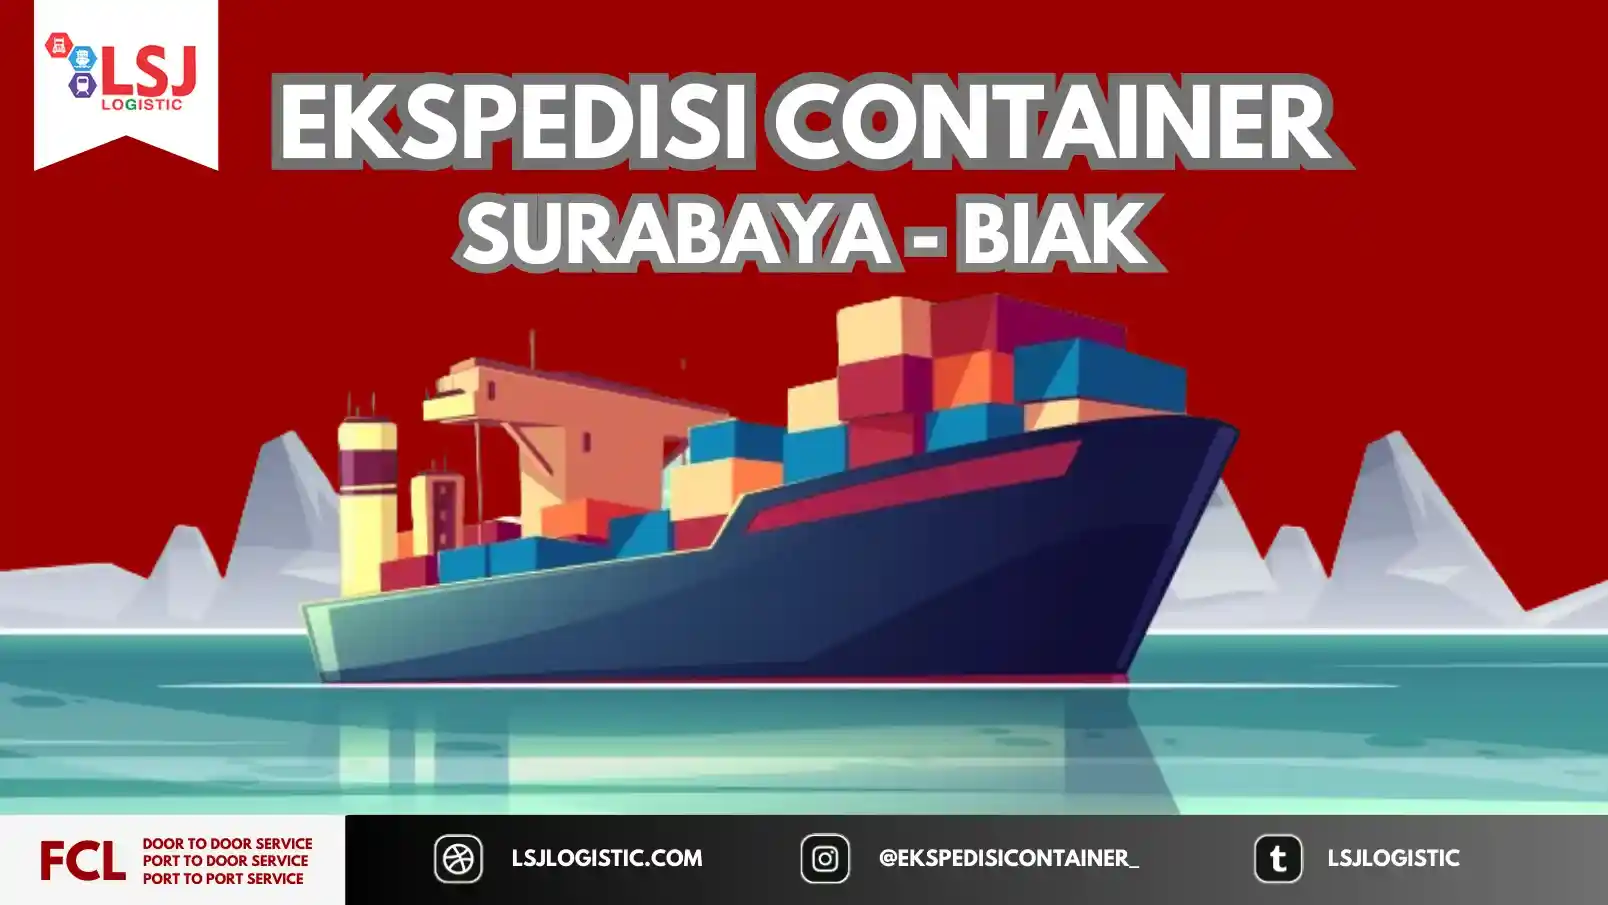 Ongkos Kirim Container Surabaya Biak